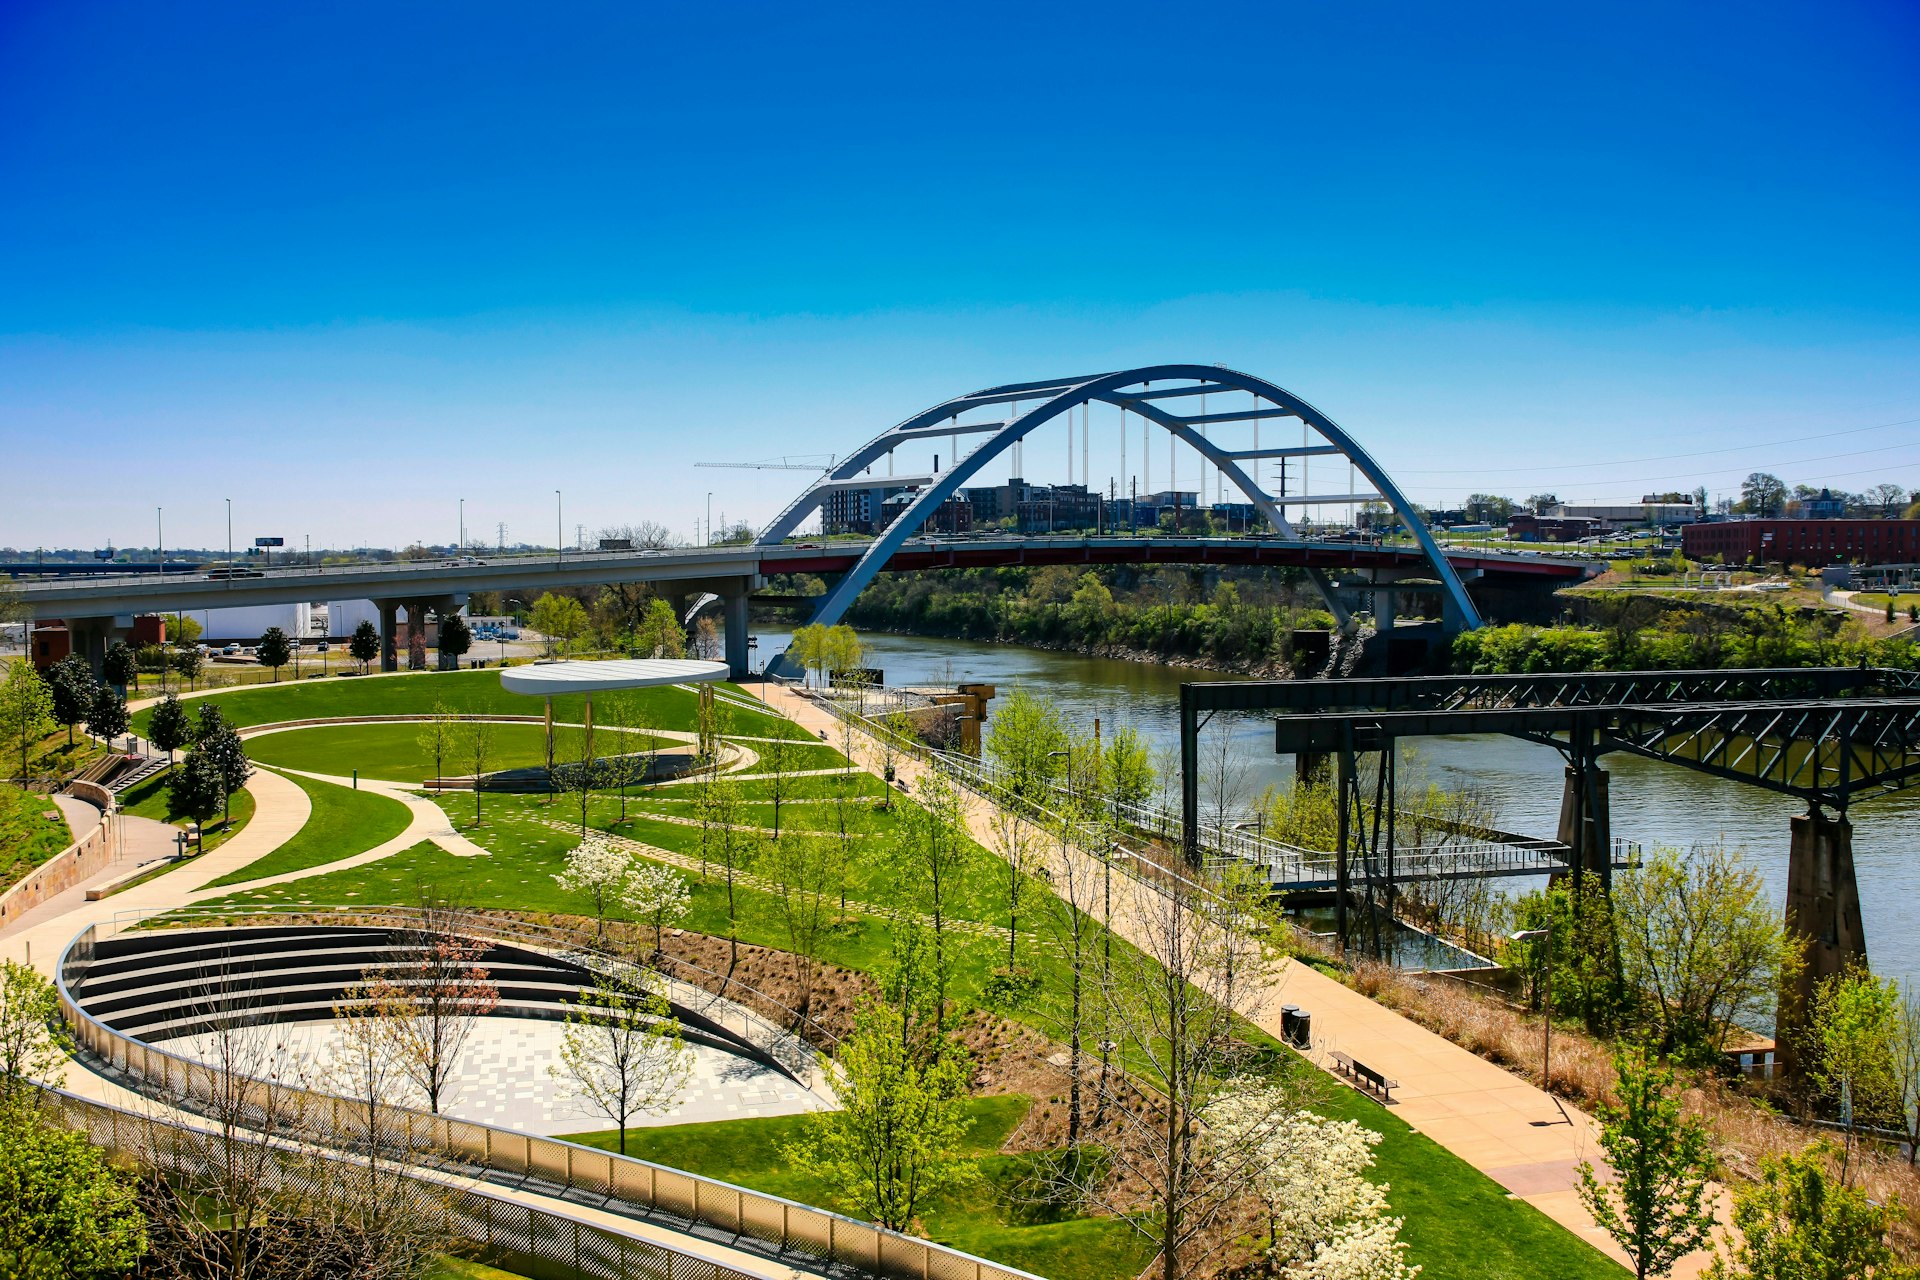 The Korean Veterans Blvd bridge and Cumberland Park in Nashville, Tennessee